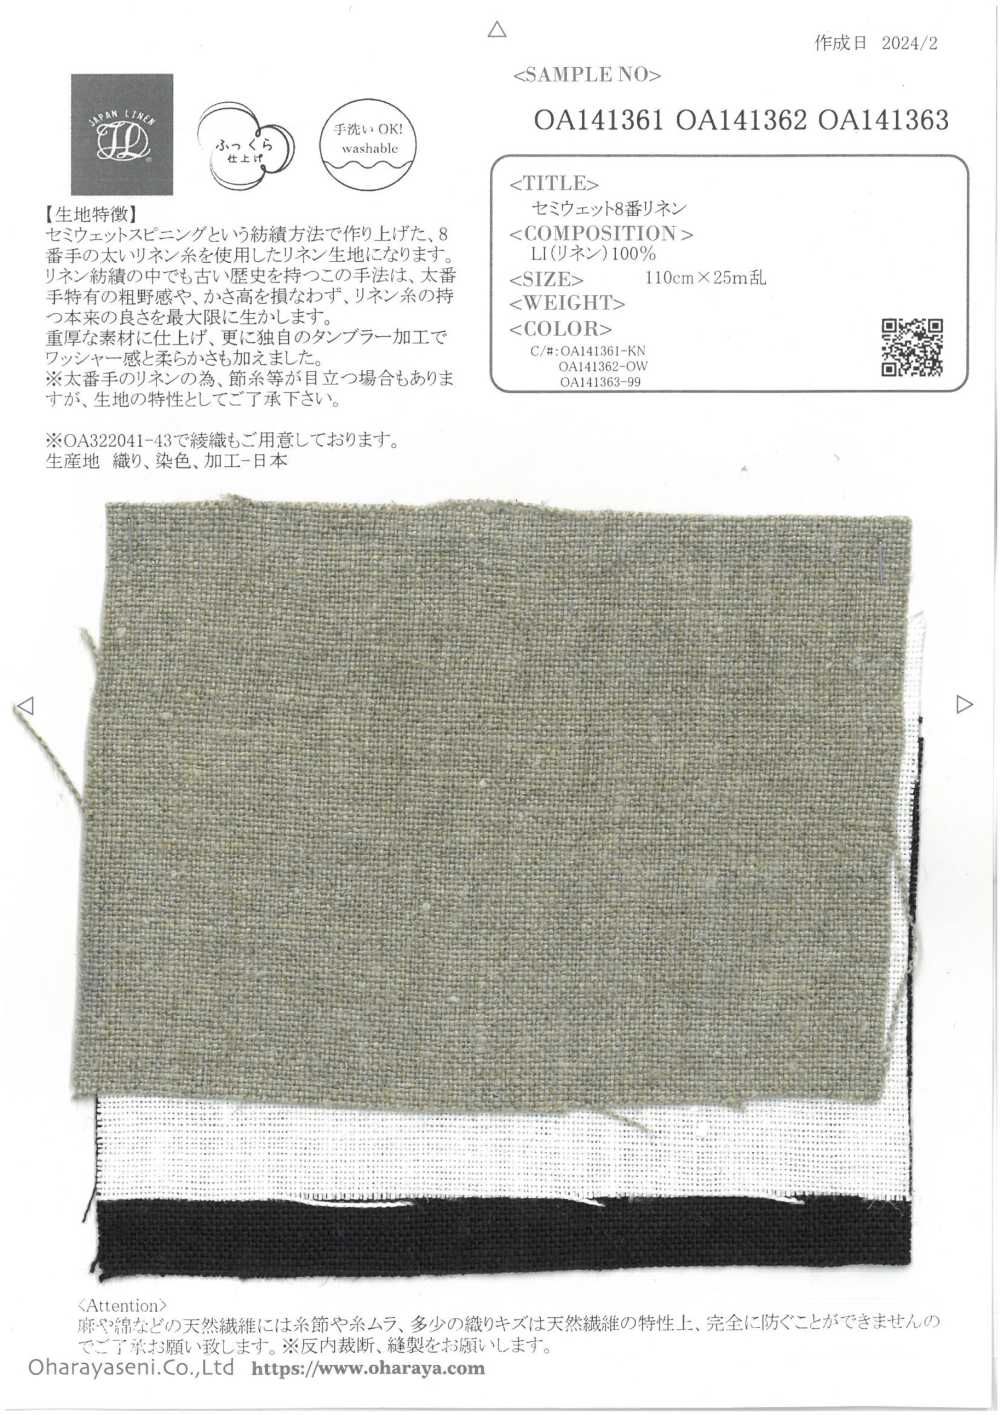 OA141362 Lino Semihúmedo N°8[Fabrica Textil] Oharayaseni